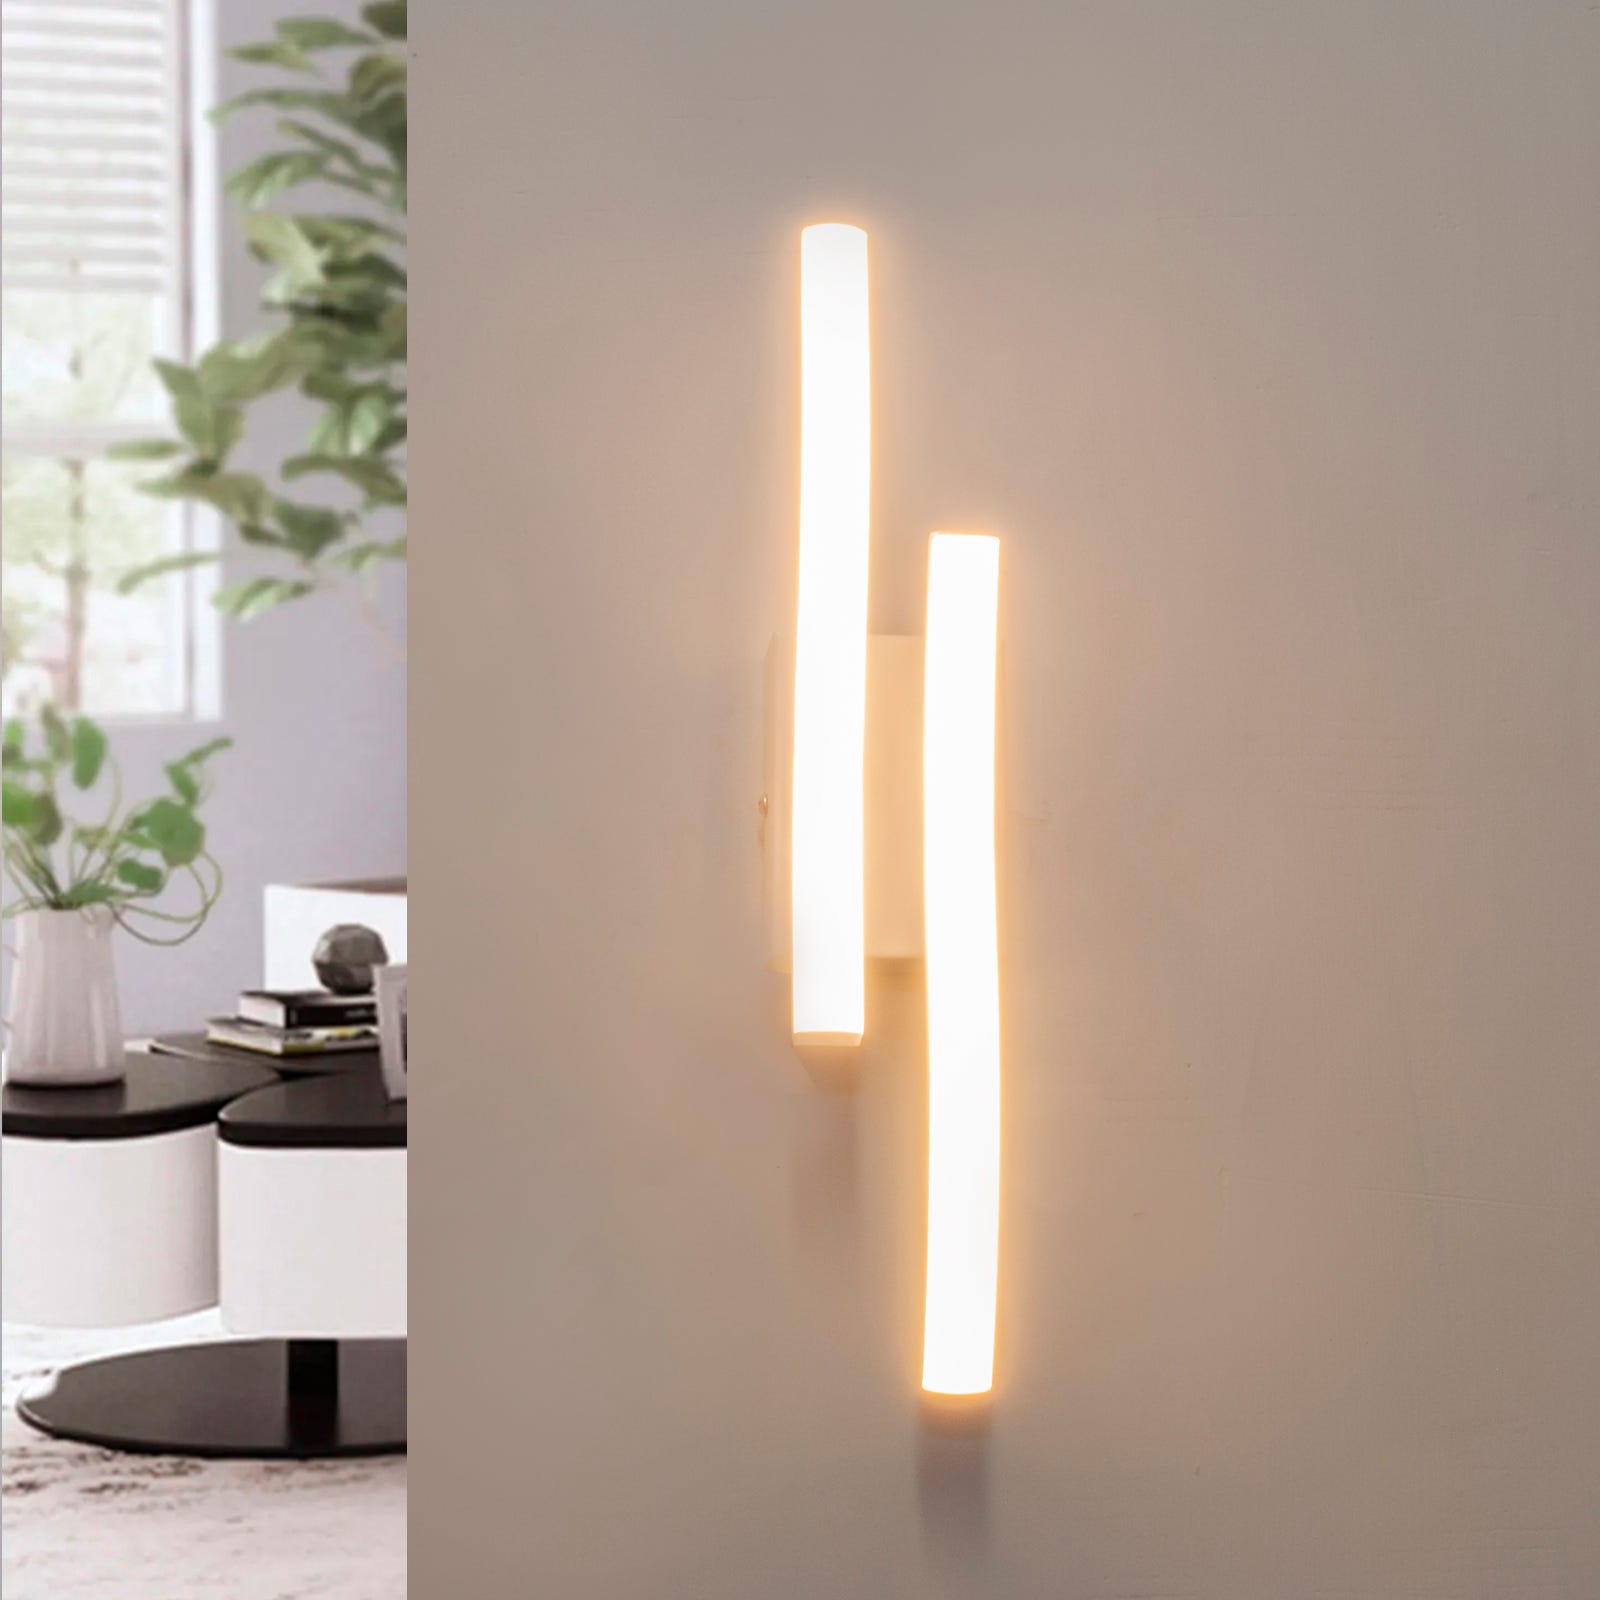 Lampada parete muro applique bianco moderno LED 10W luce